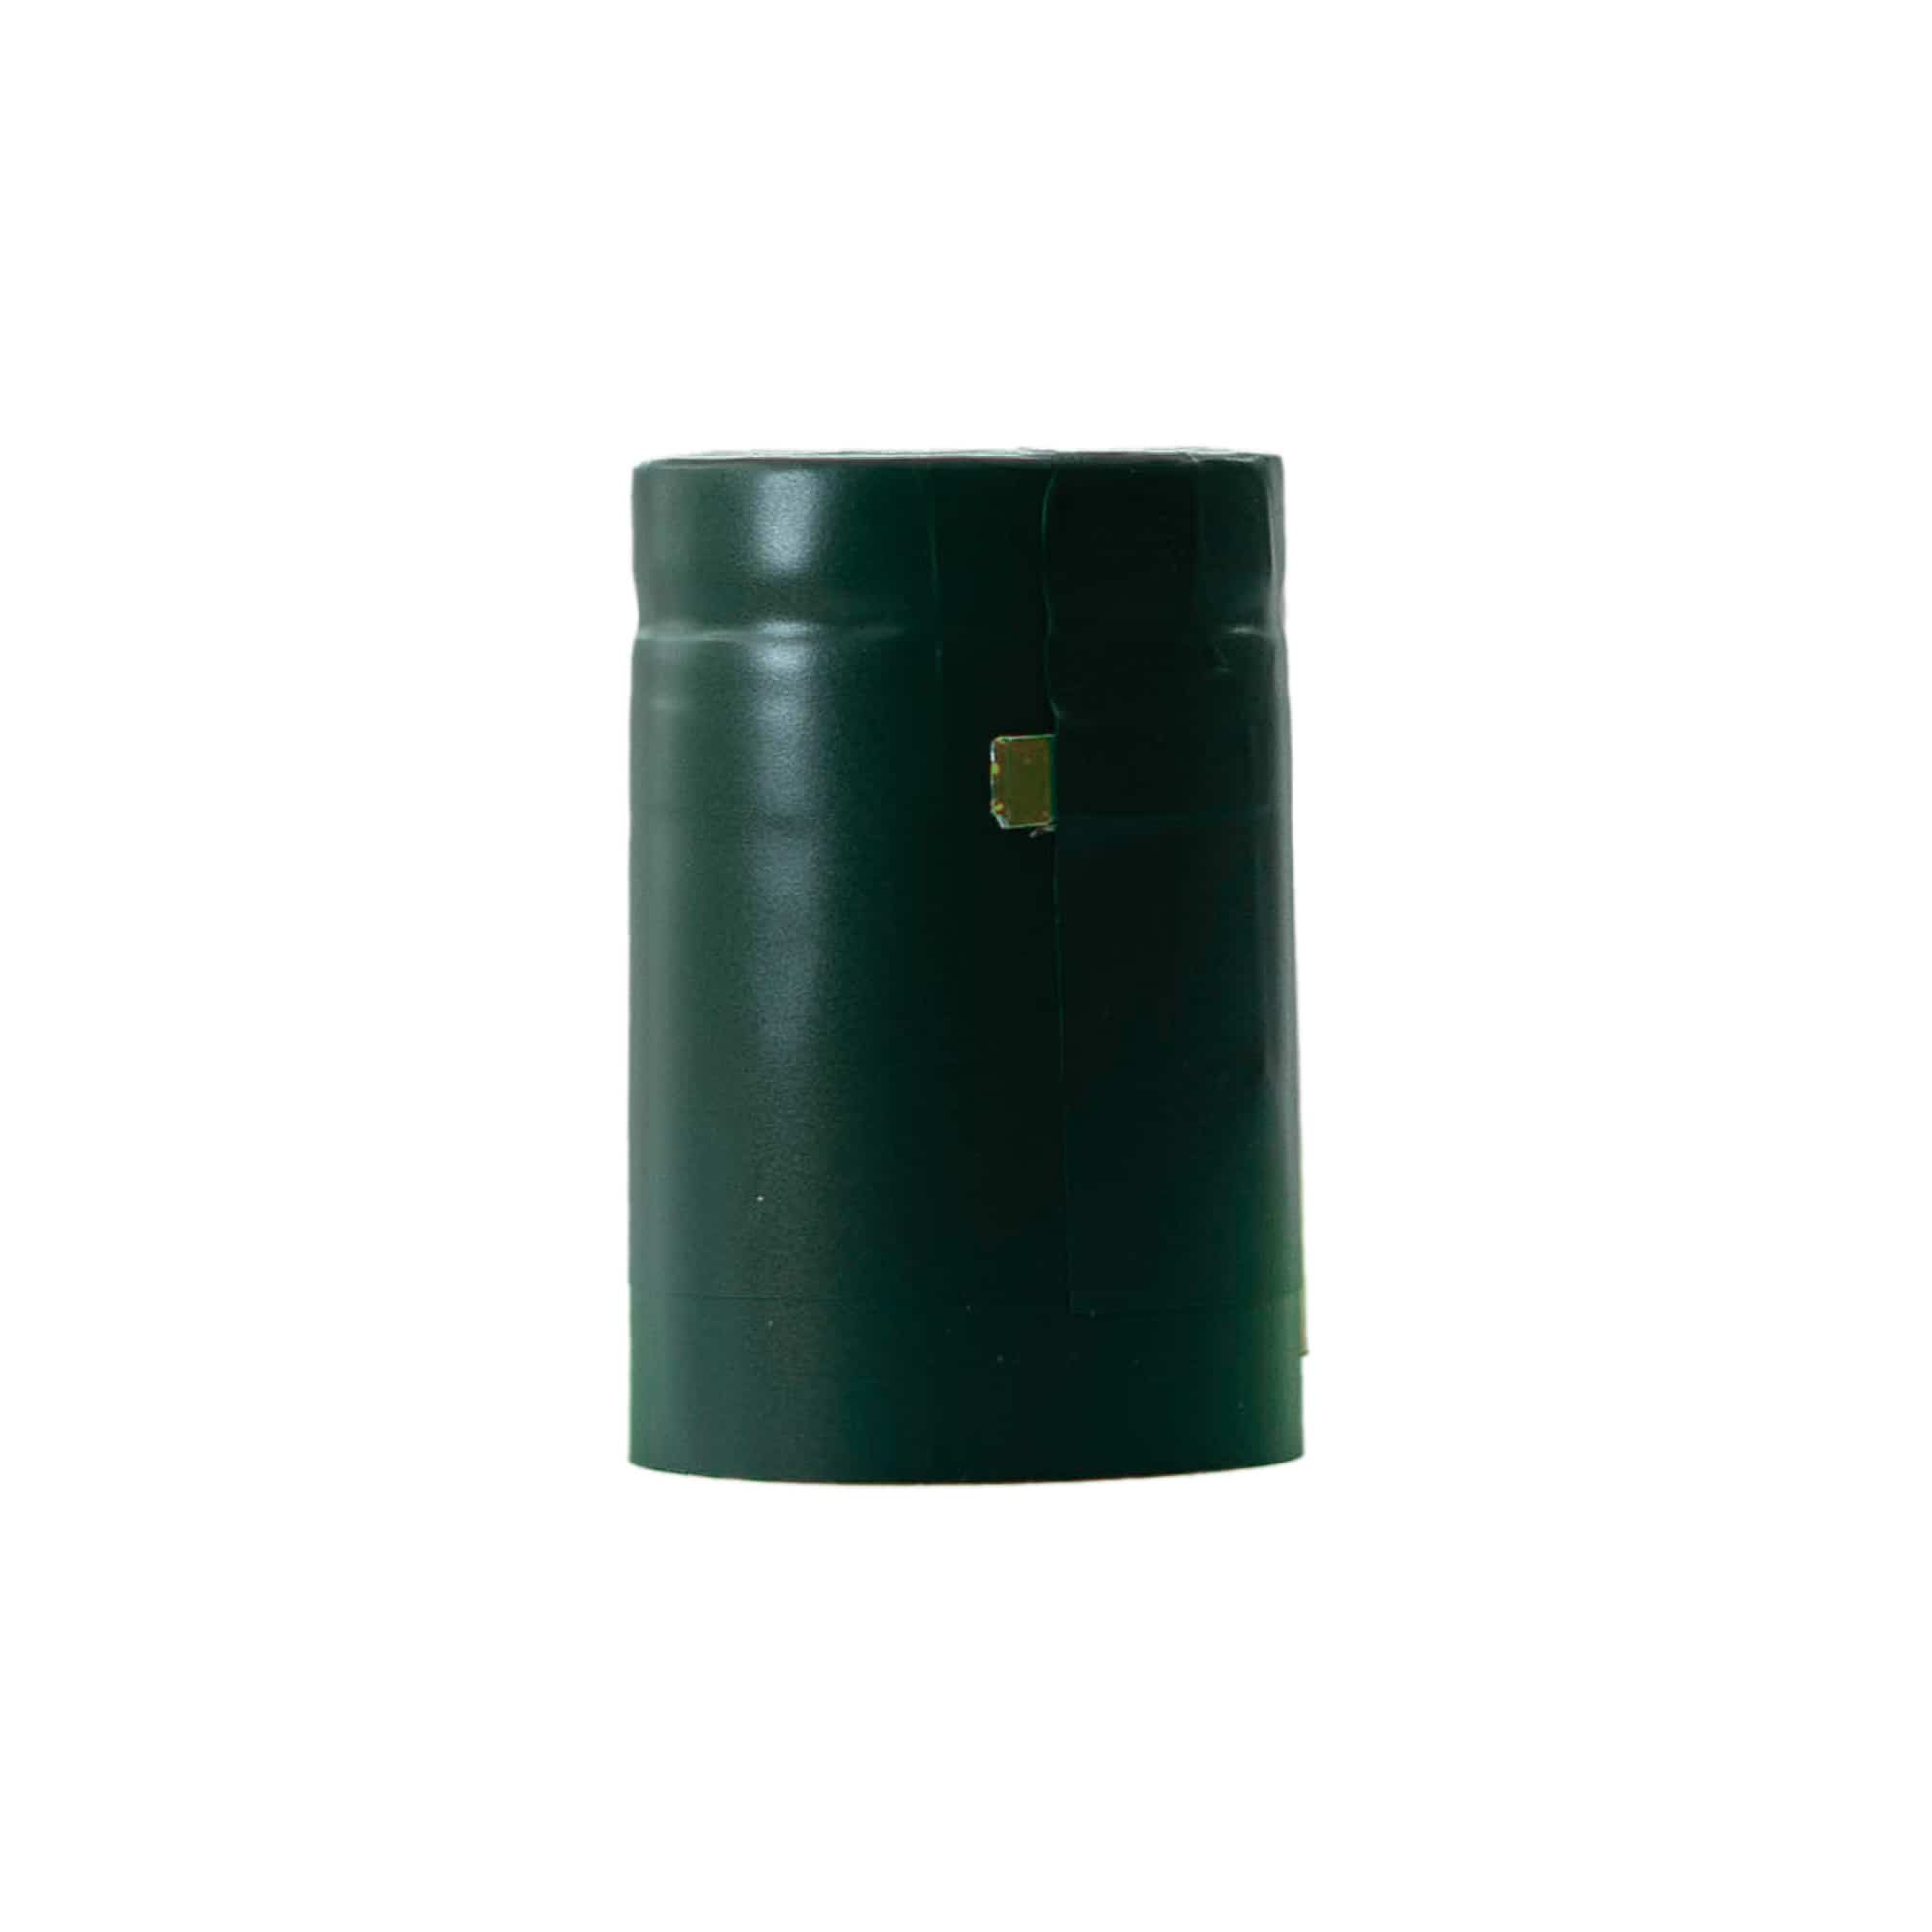 Capsula termoretraibile 32x41, plastica PVC, verde smaragad